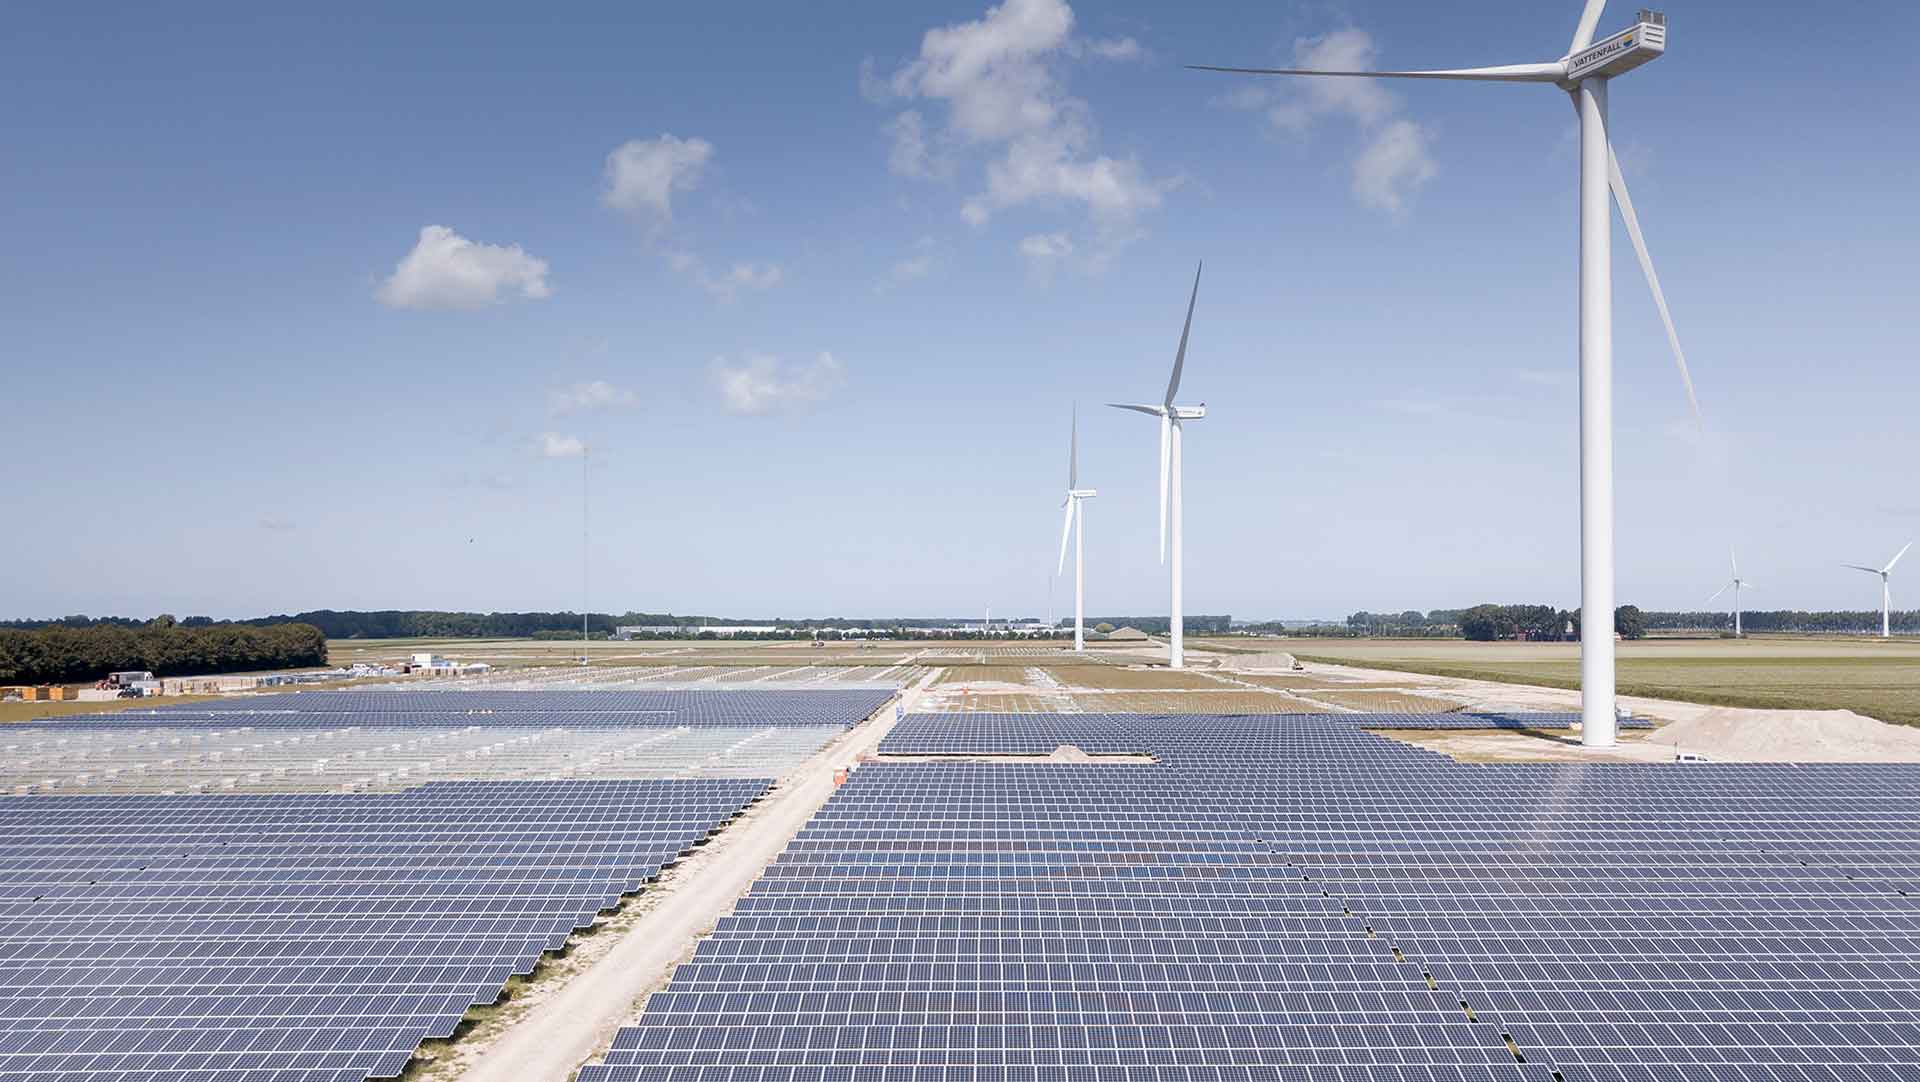 The energy park Haringvliet Zuid in the Netherlands